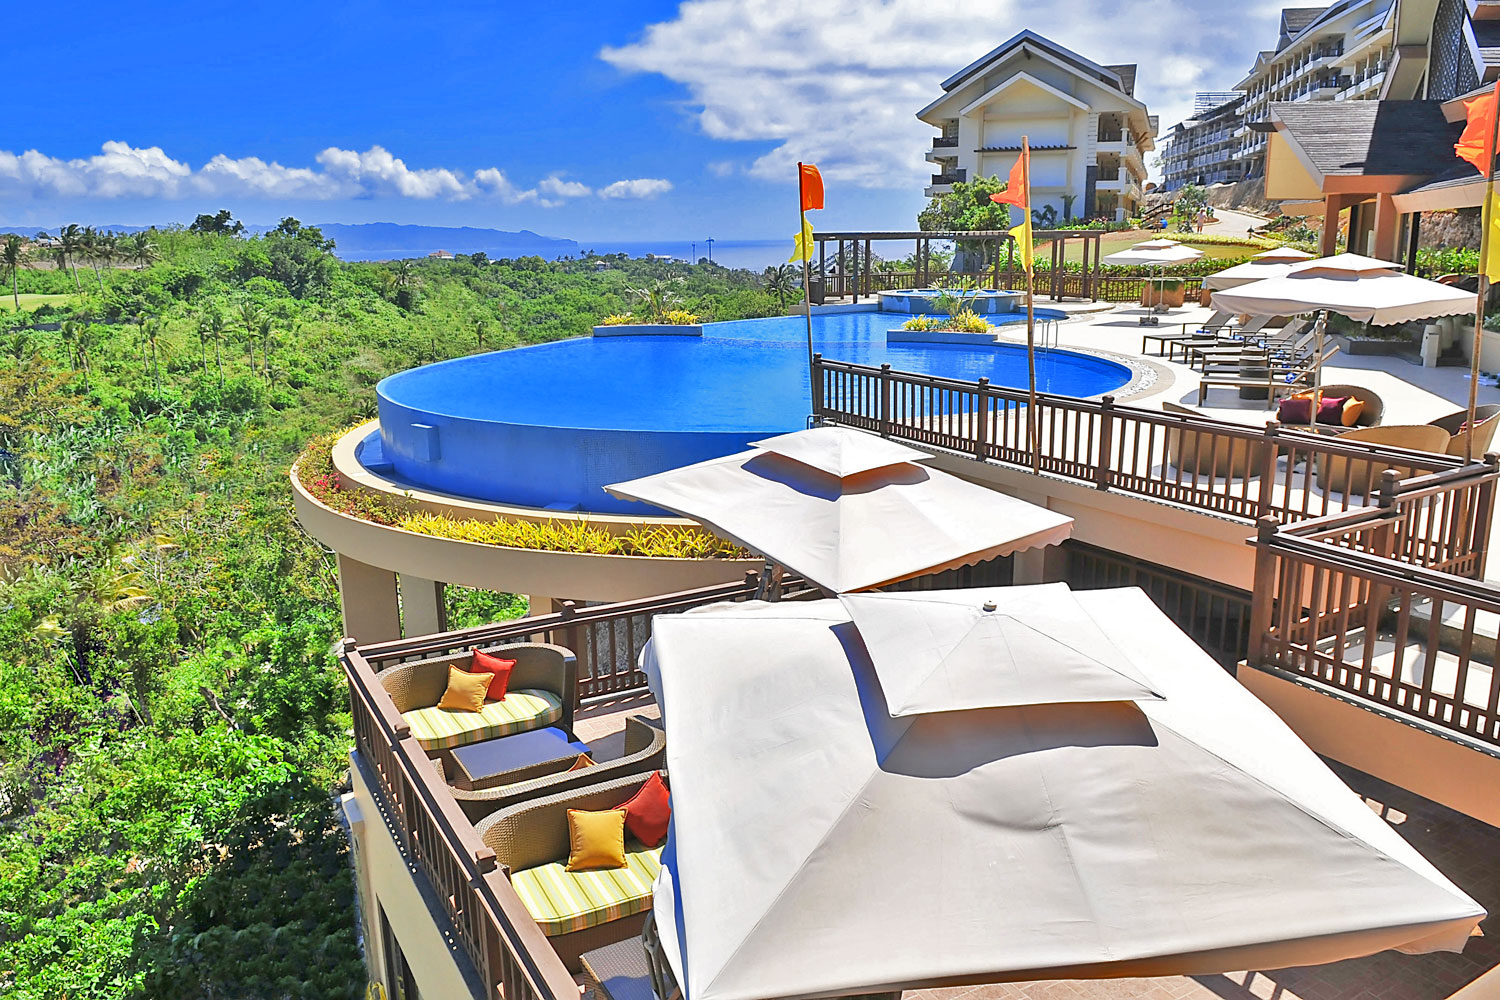 Best Boracay Hotels: Why You Must Choose Alta Vista De Boracay